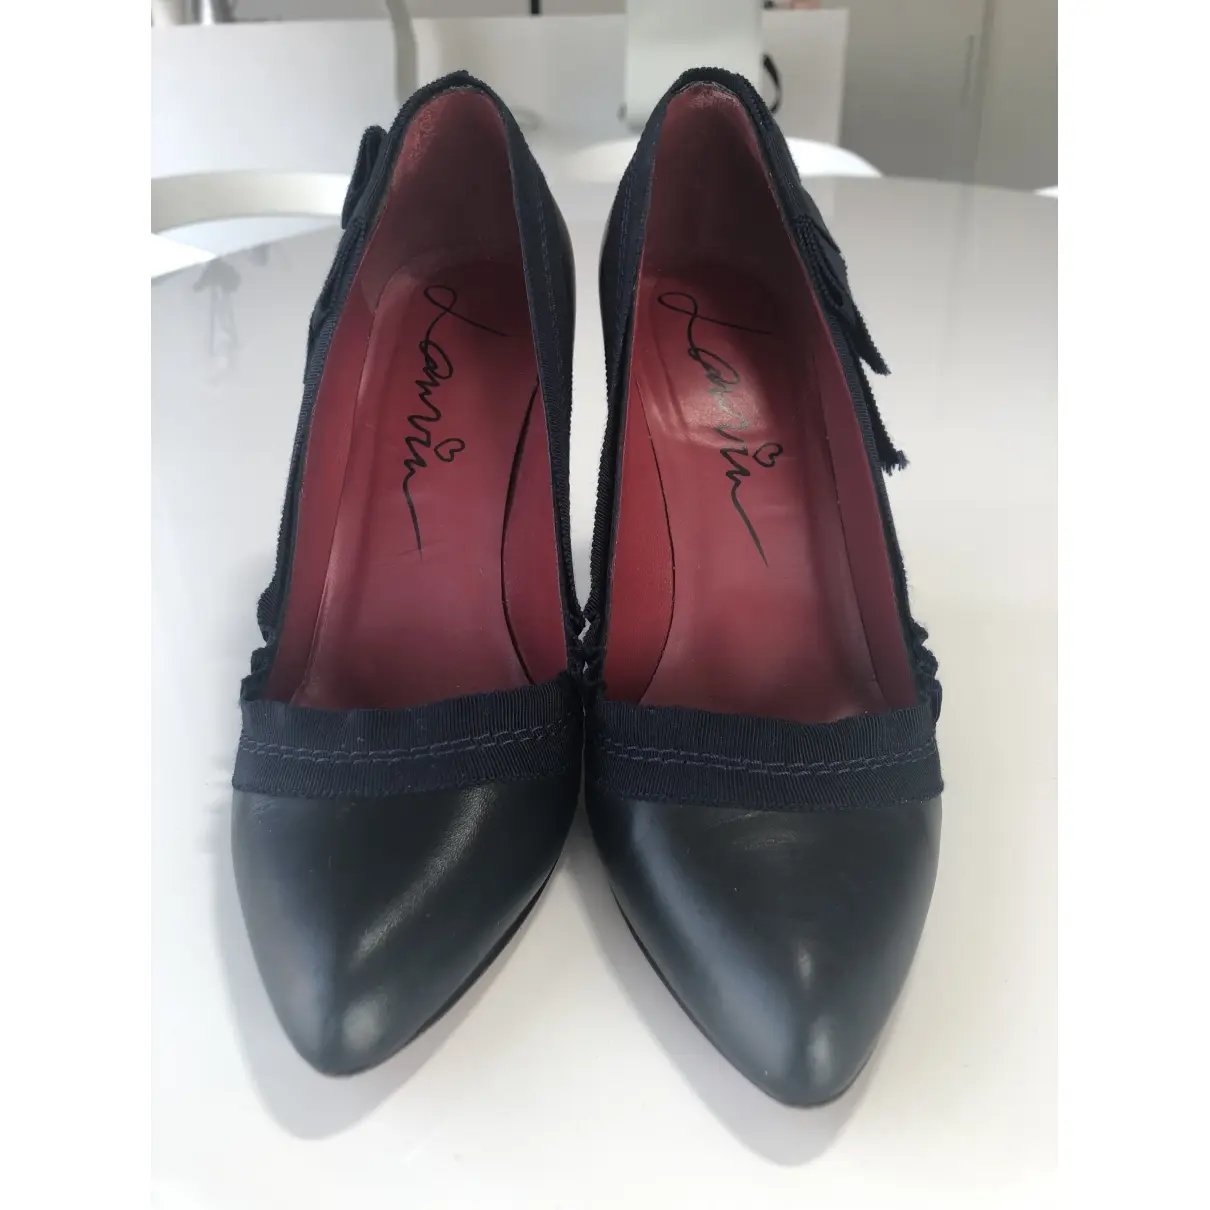 Lanvin Leather heels for sale